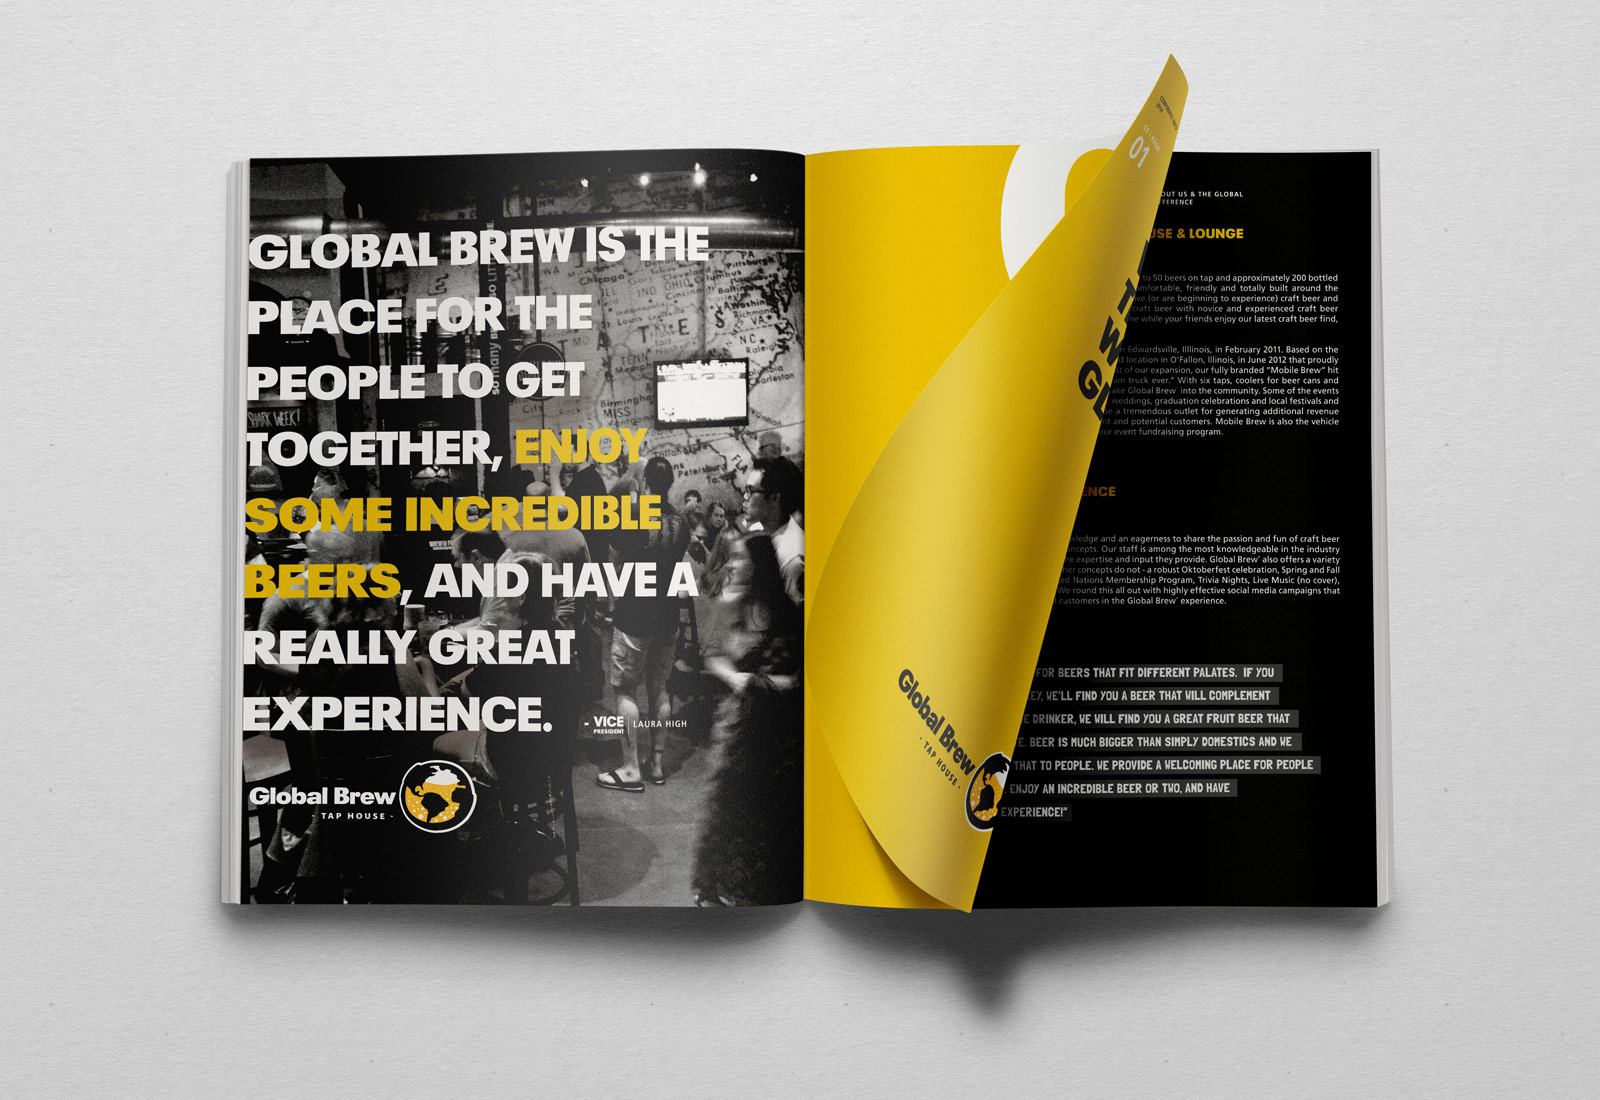 Global Brew Tap House Franchise Brochure